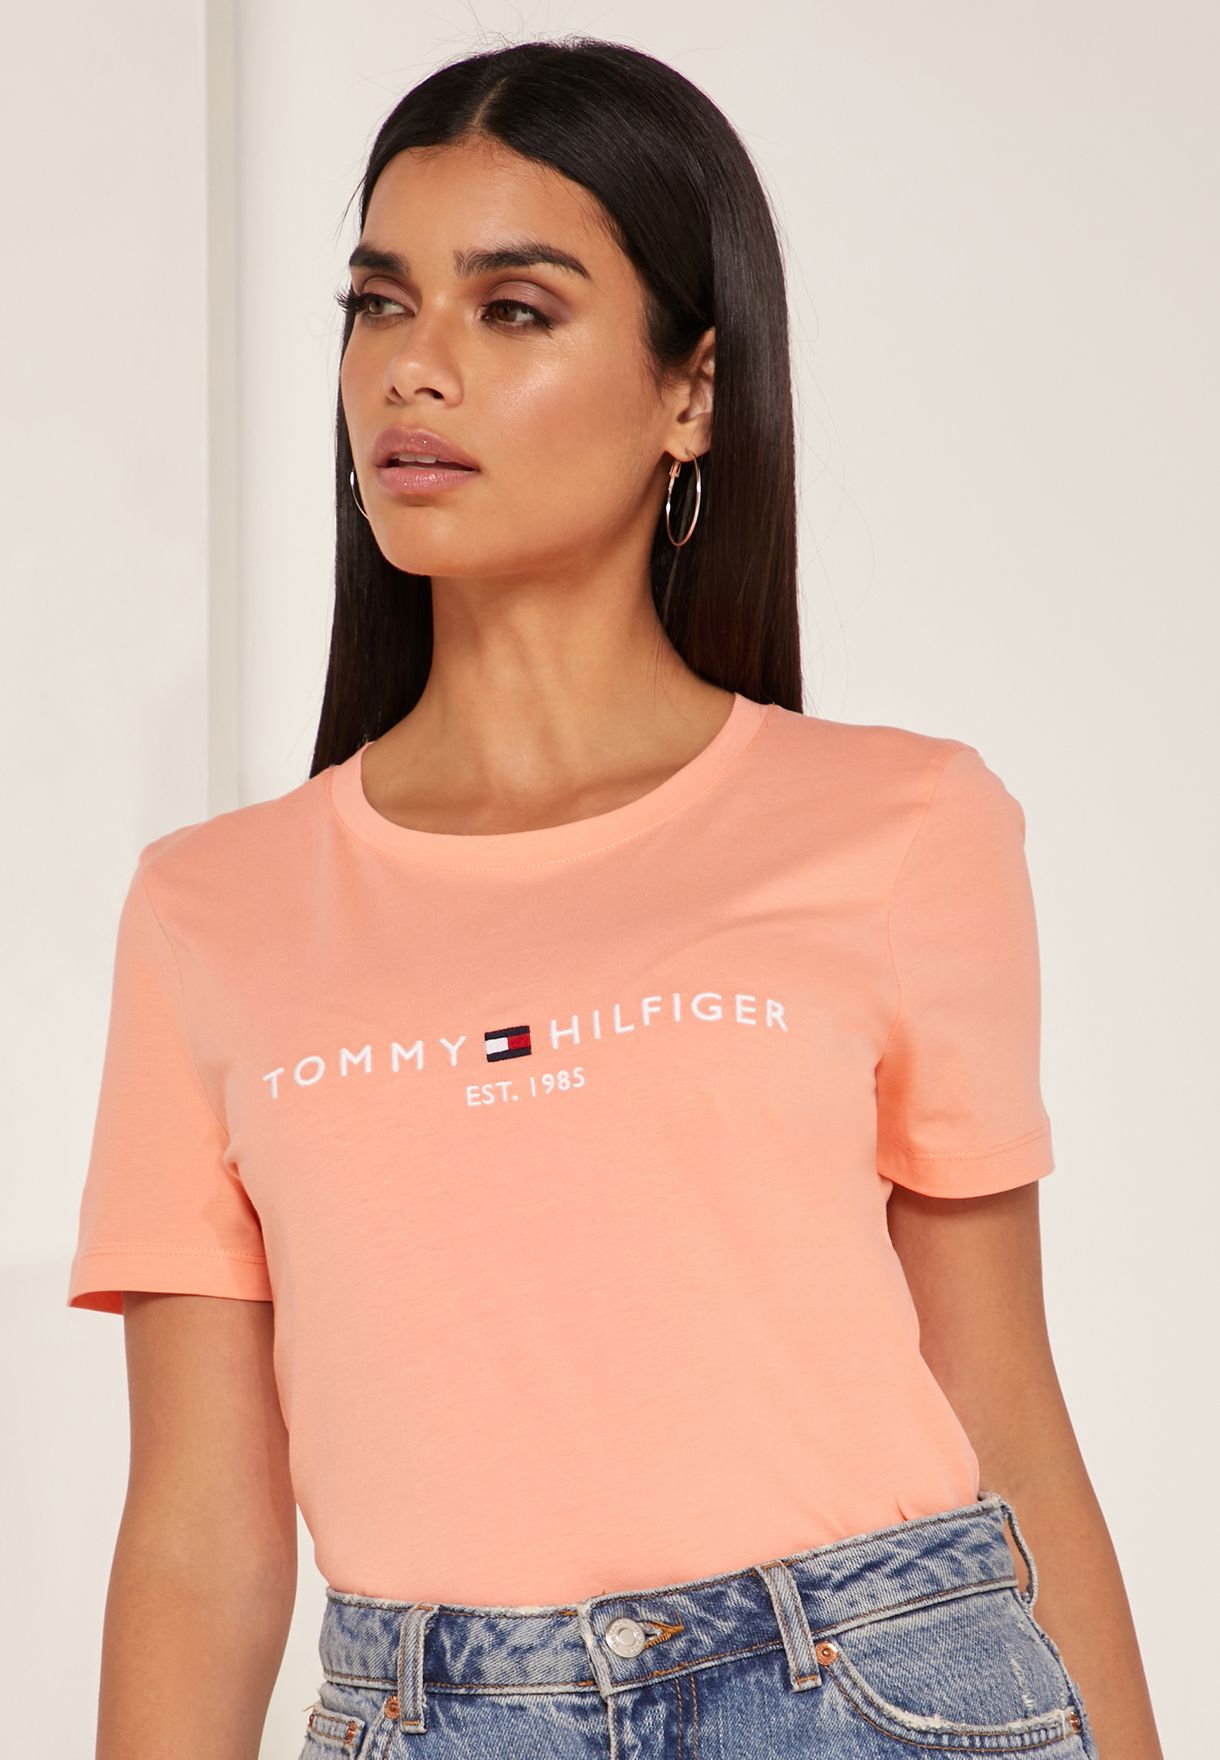 tommy hilfiger pink t shirt